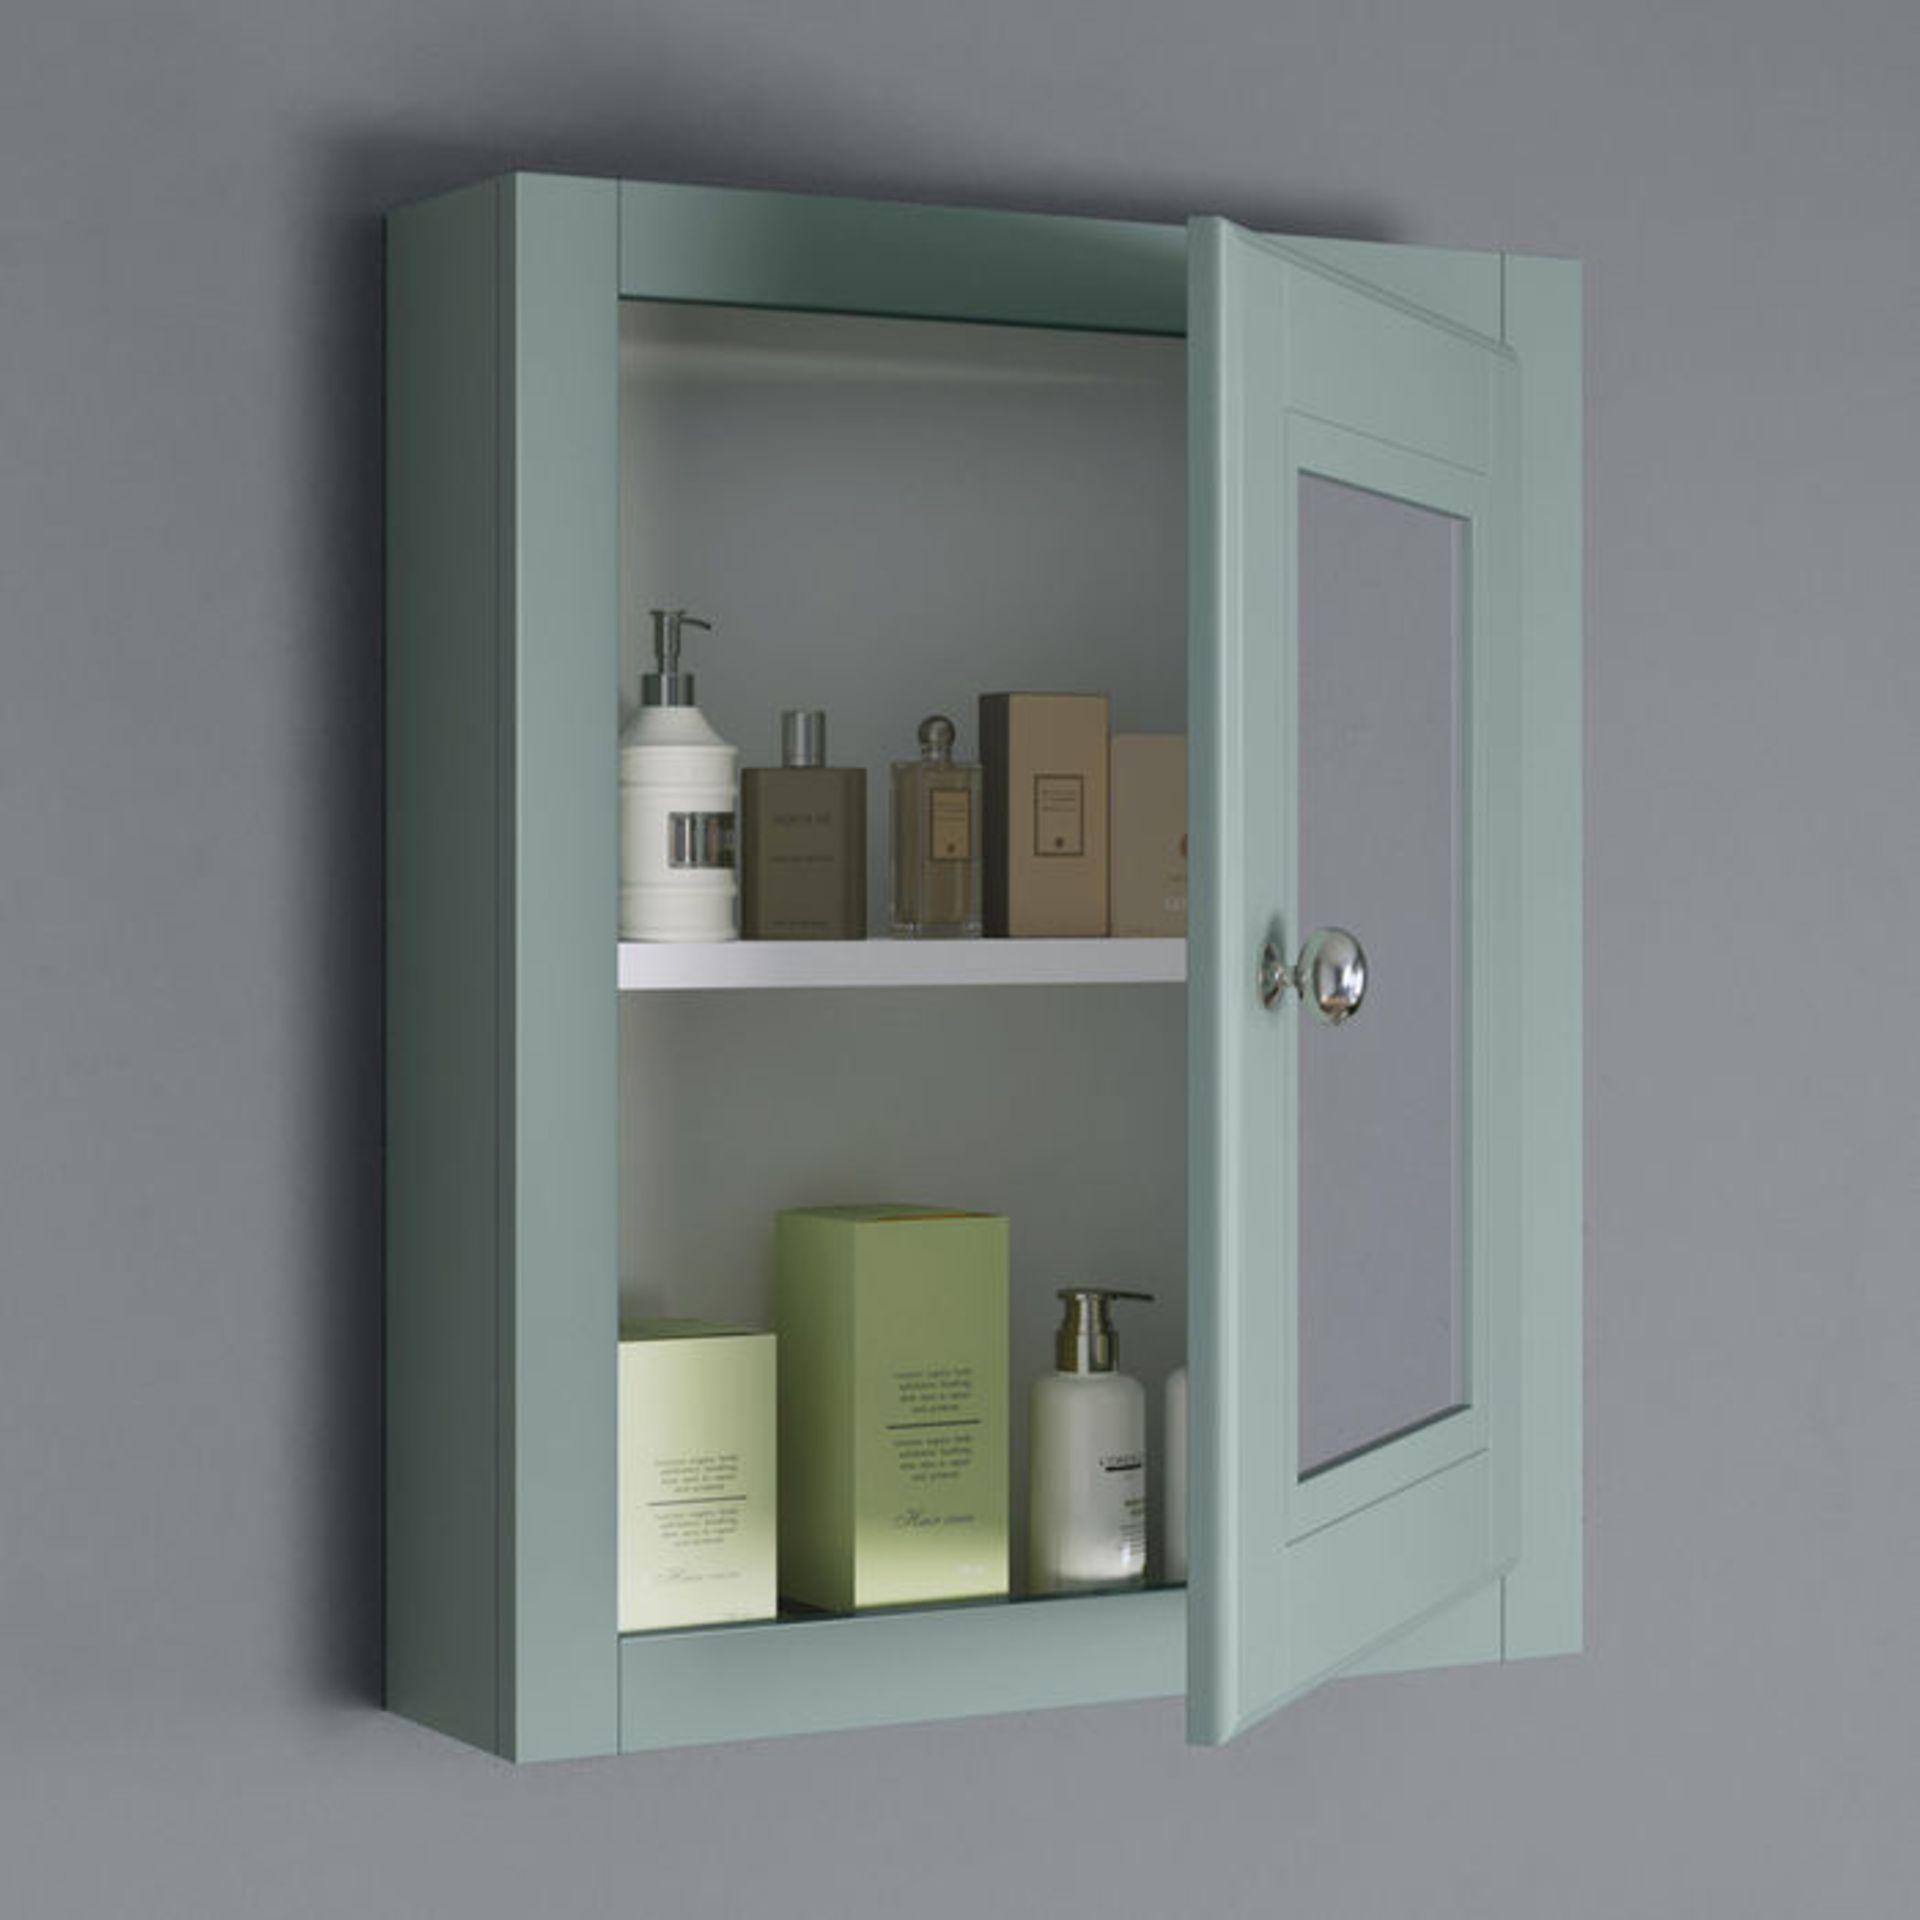 (XX39) Cambridge Single Door Mirror Cabinet - Marine Mist. RRP £199.99. Traditional aesthetic ... - Image 2 of 5